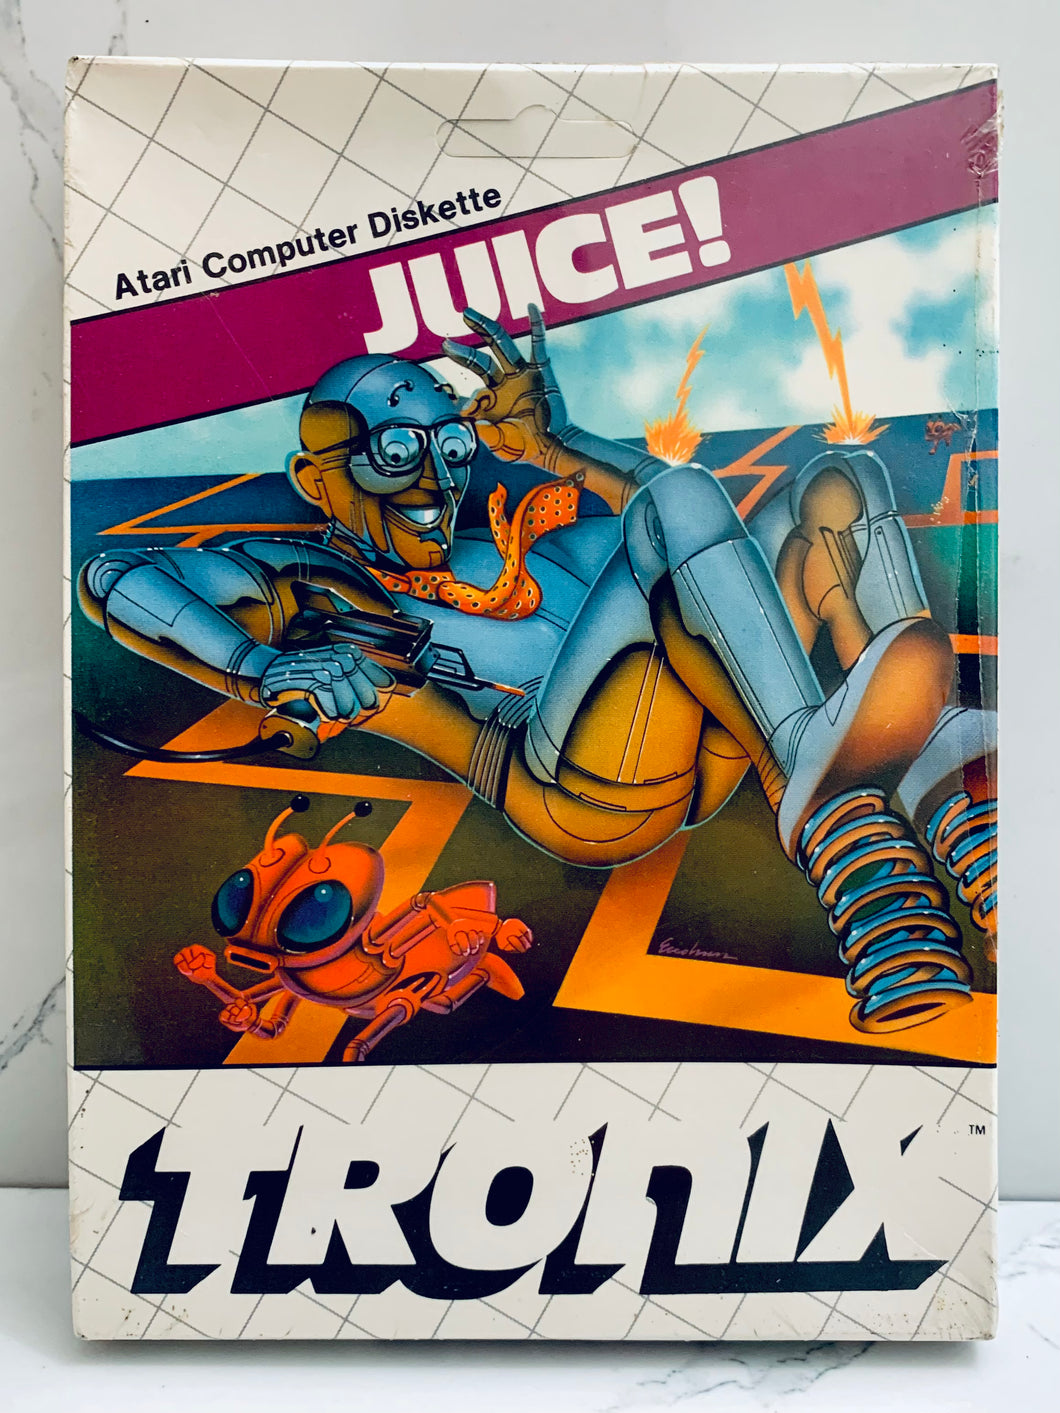 Juice! - Atari 400/800 - Diskette - NTSC - Brand New